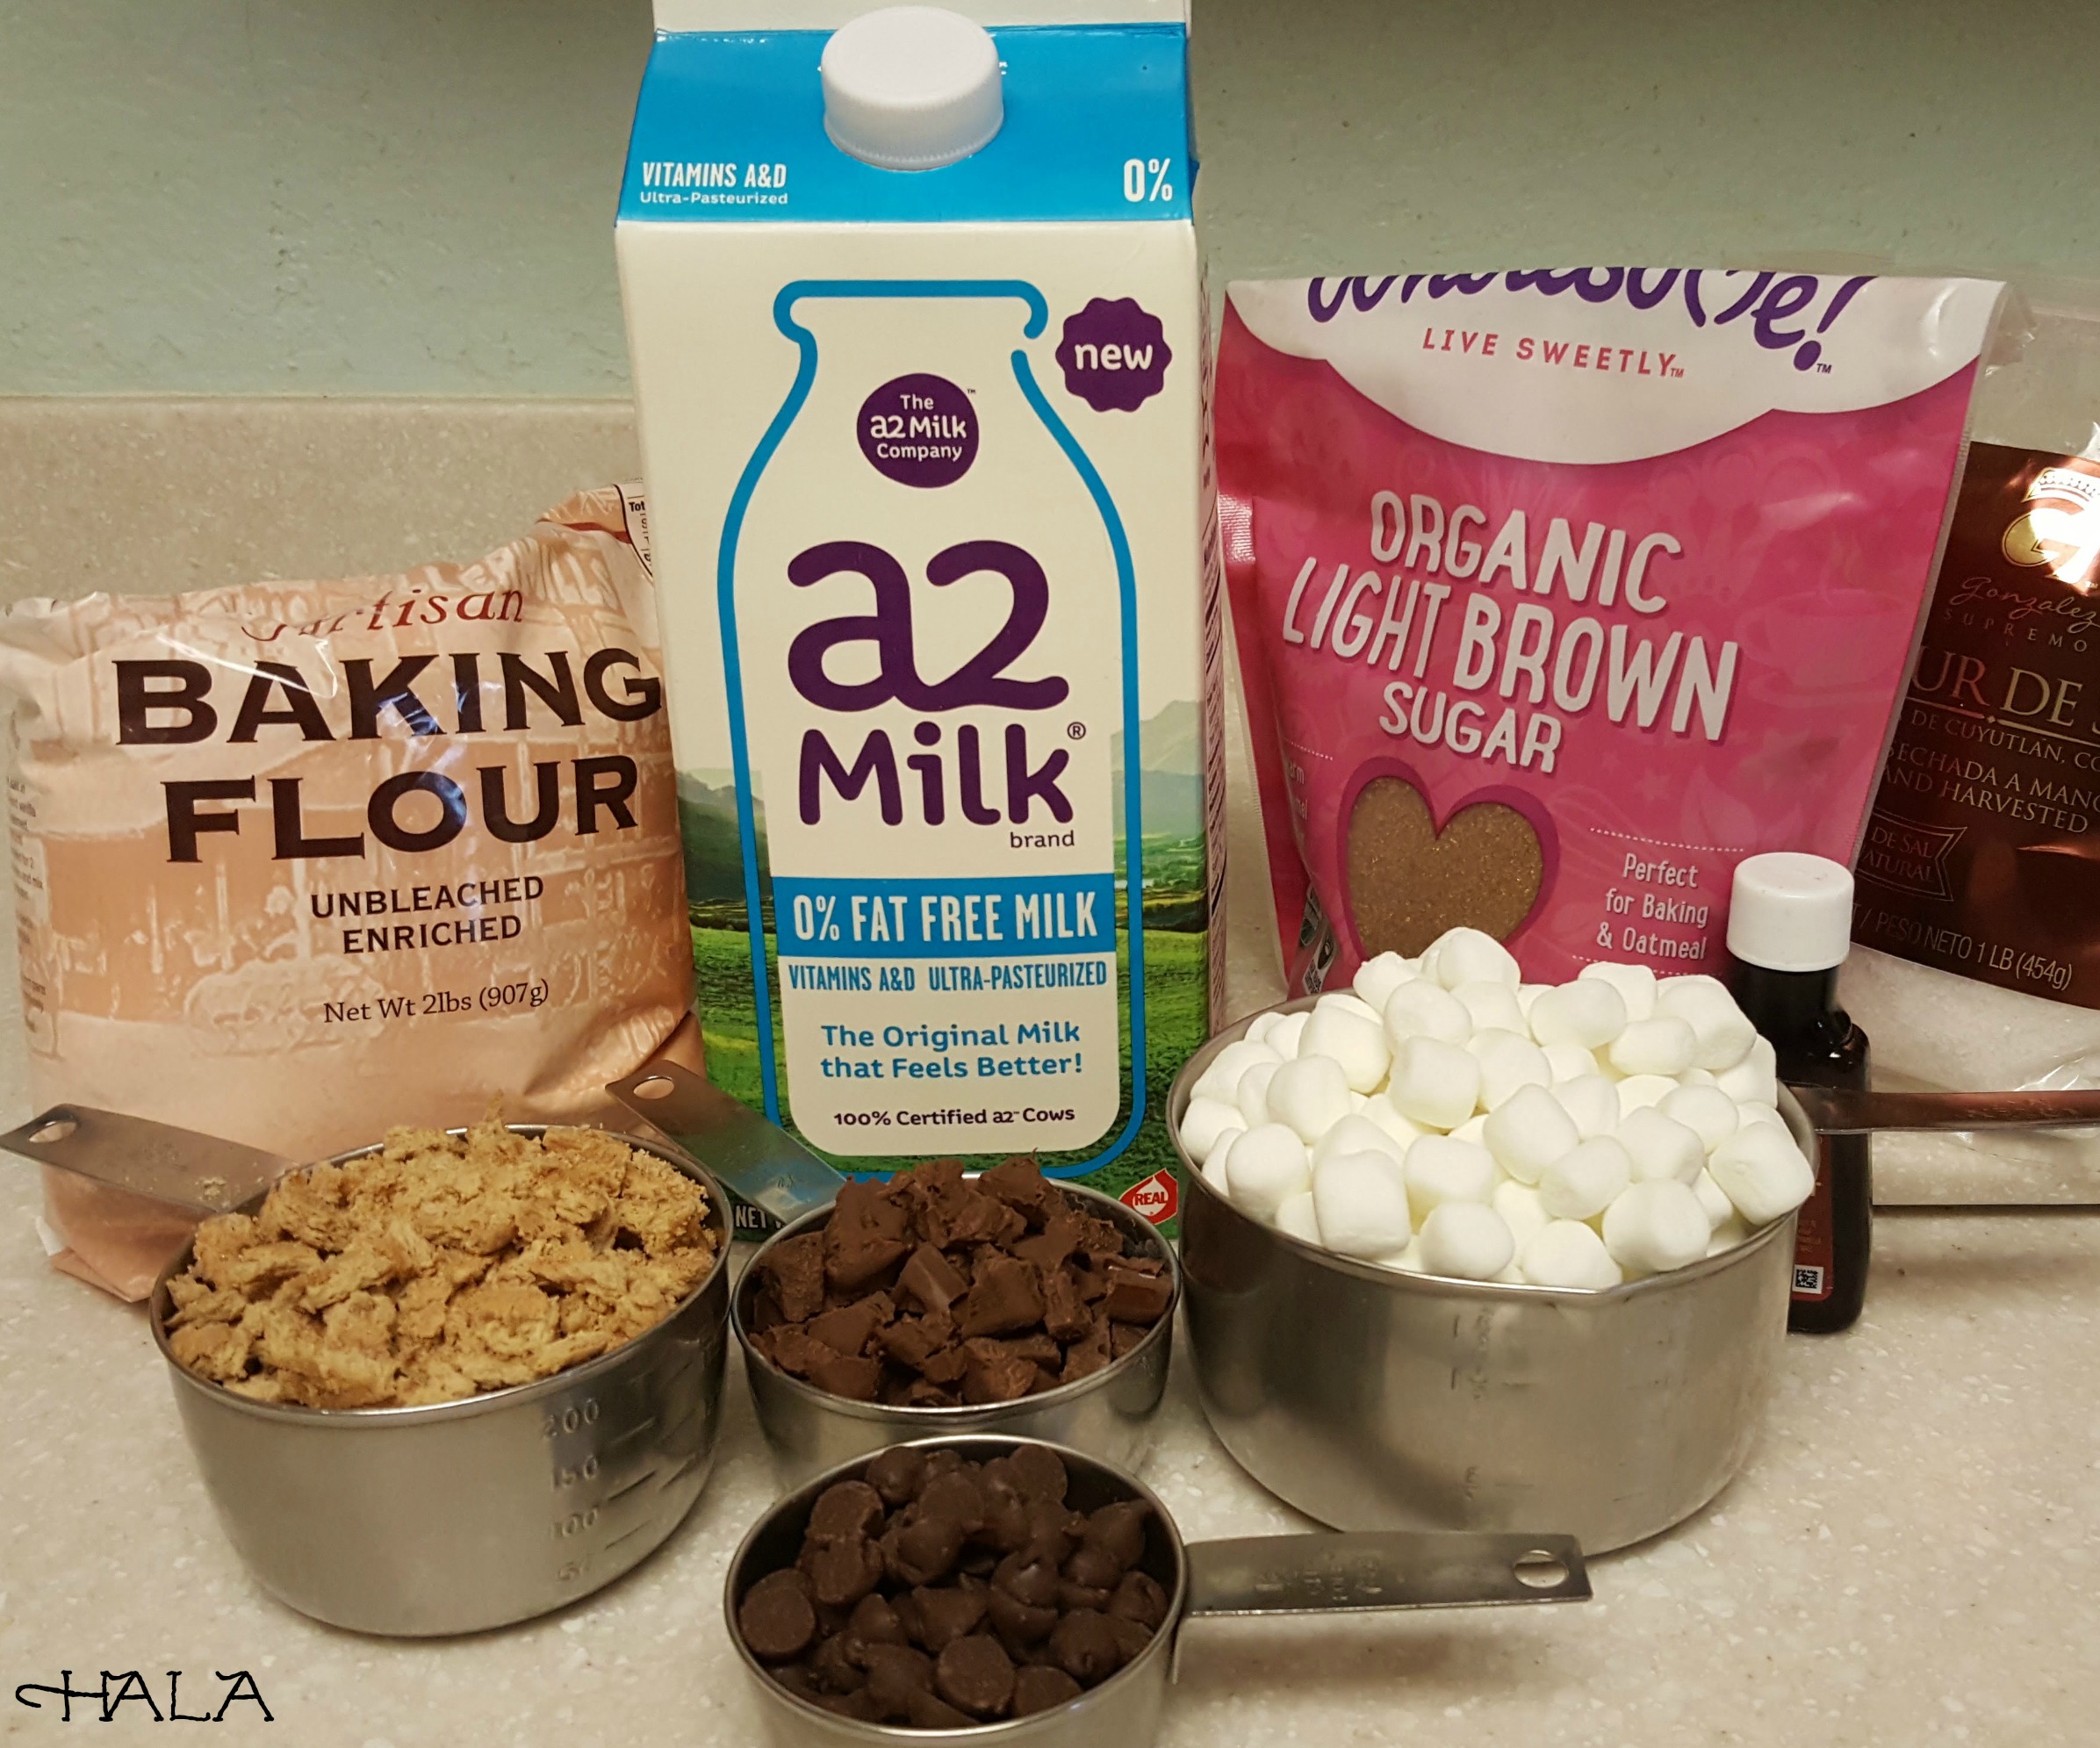 a2-Milk-Cookie-Ingred